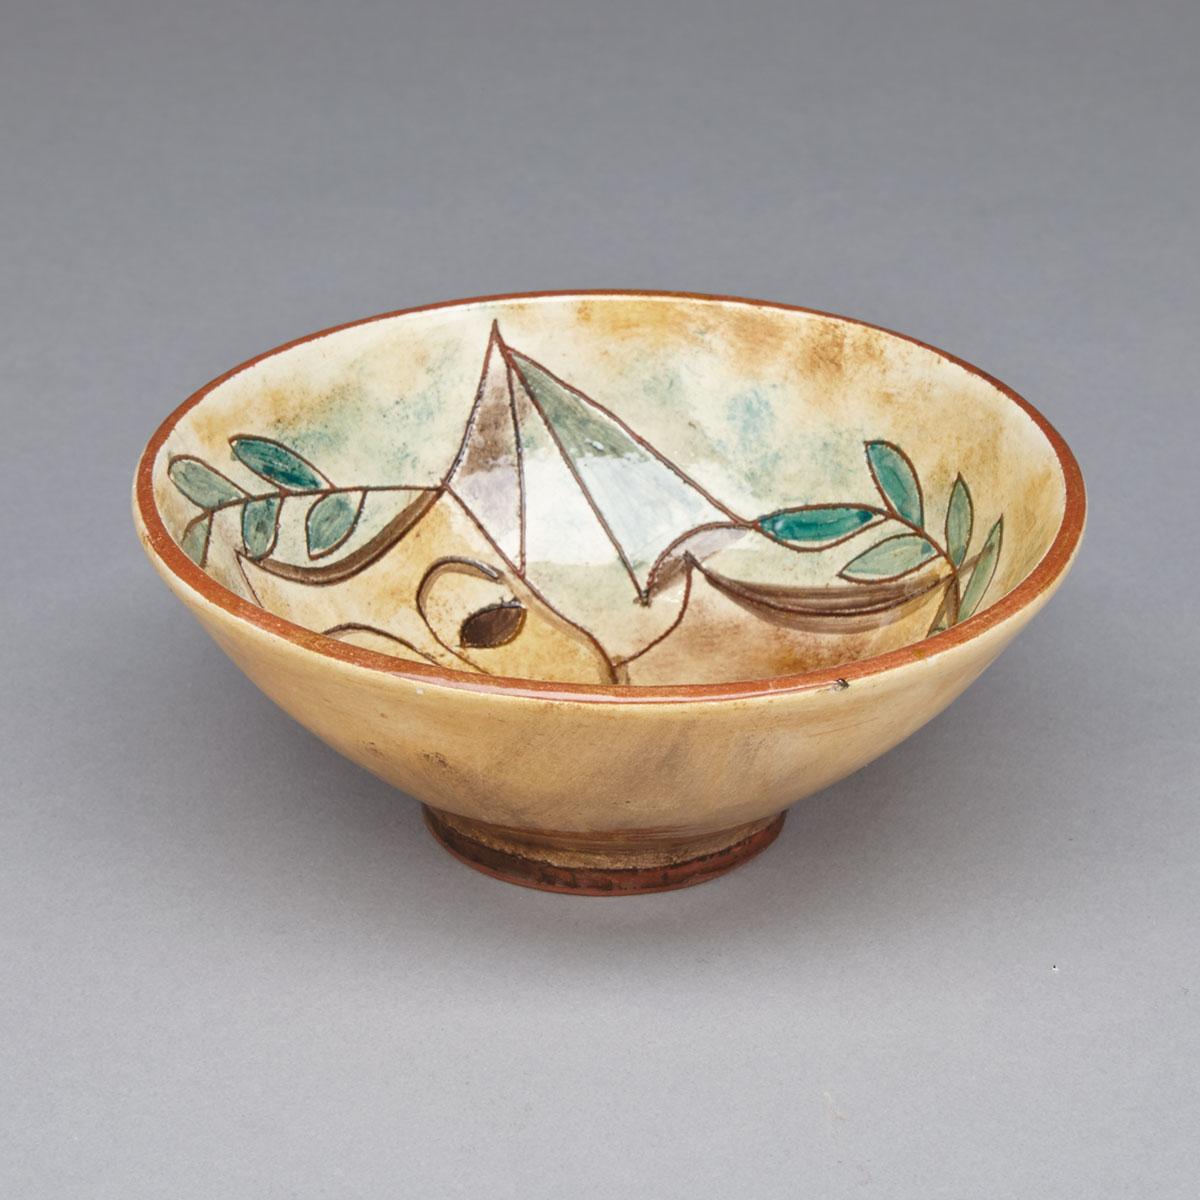 Brooklin Pottery Small Bowl, Theo and Susan Harlander, c.1960